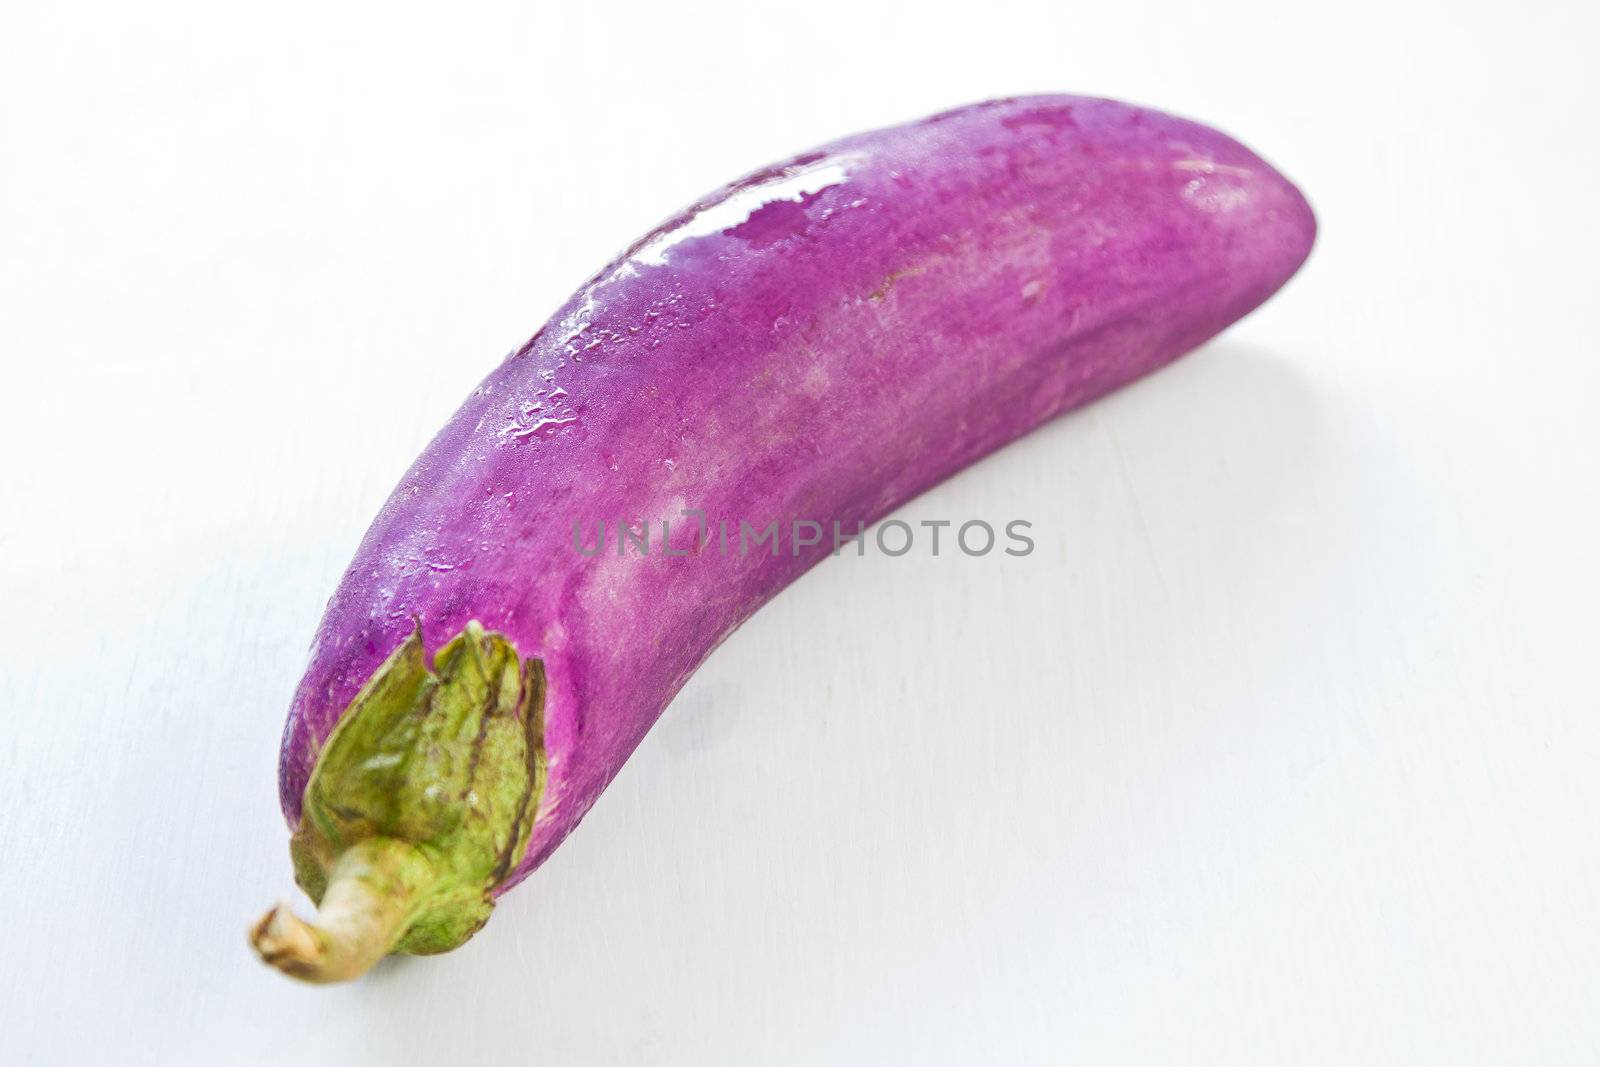 Thai 's Eggplant or Aubergine